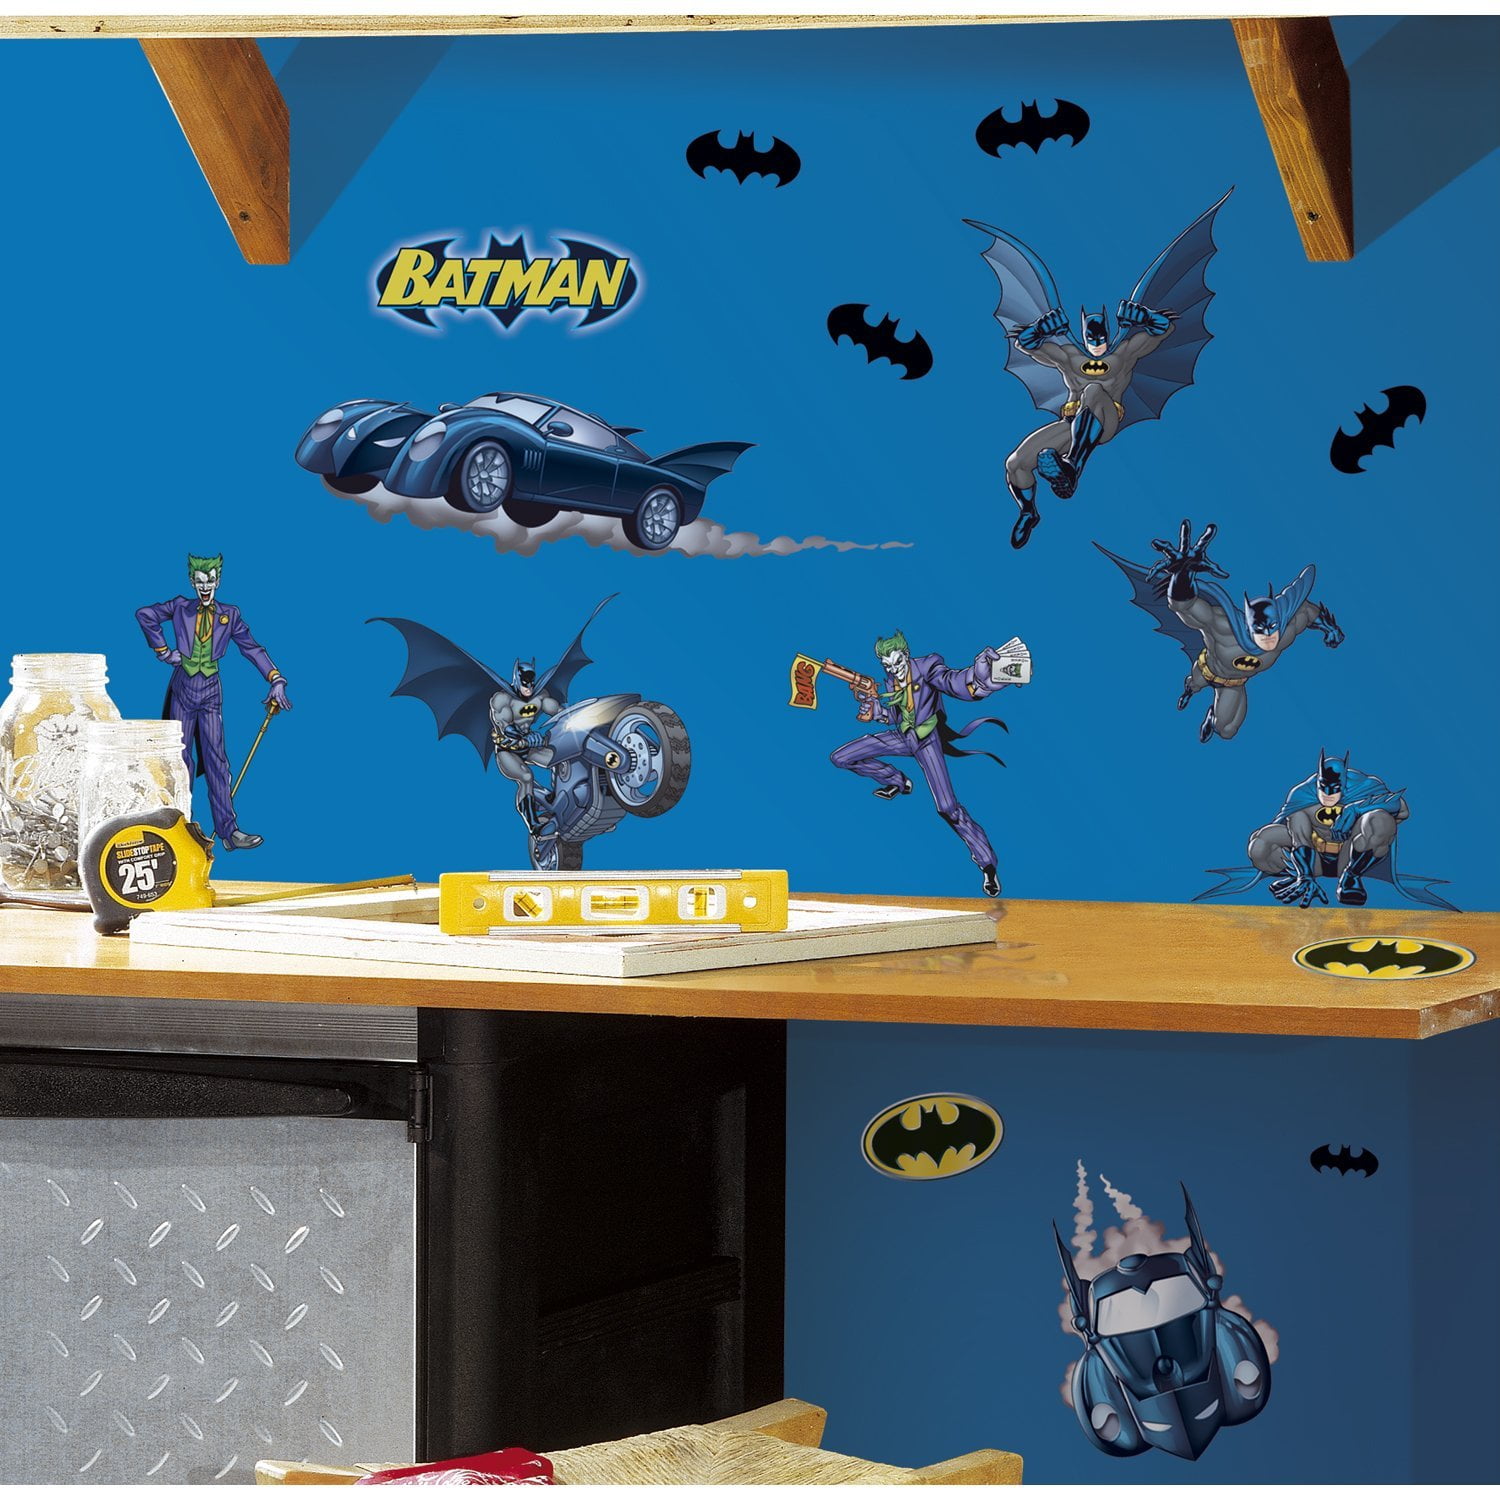 Kids Room Wall Sticker Spiderman BATMAN CAPTAIN AMERICA Super Hero Decal Decor